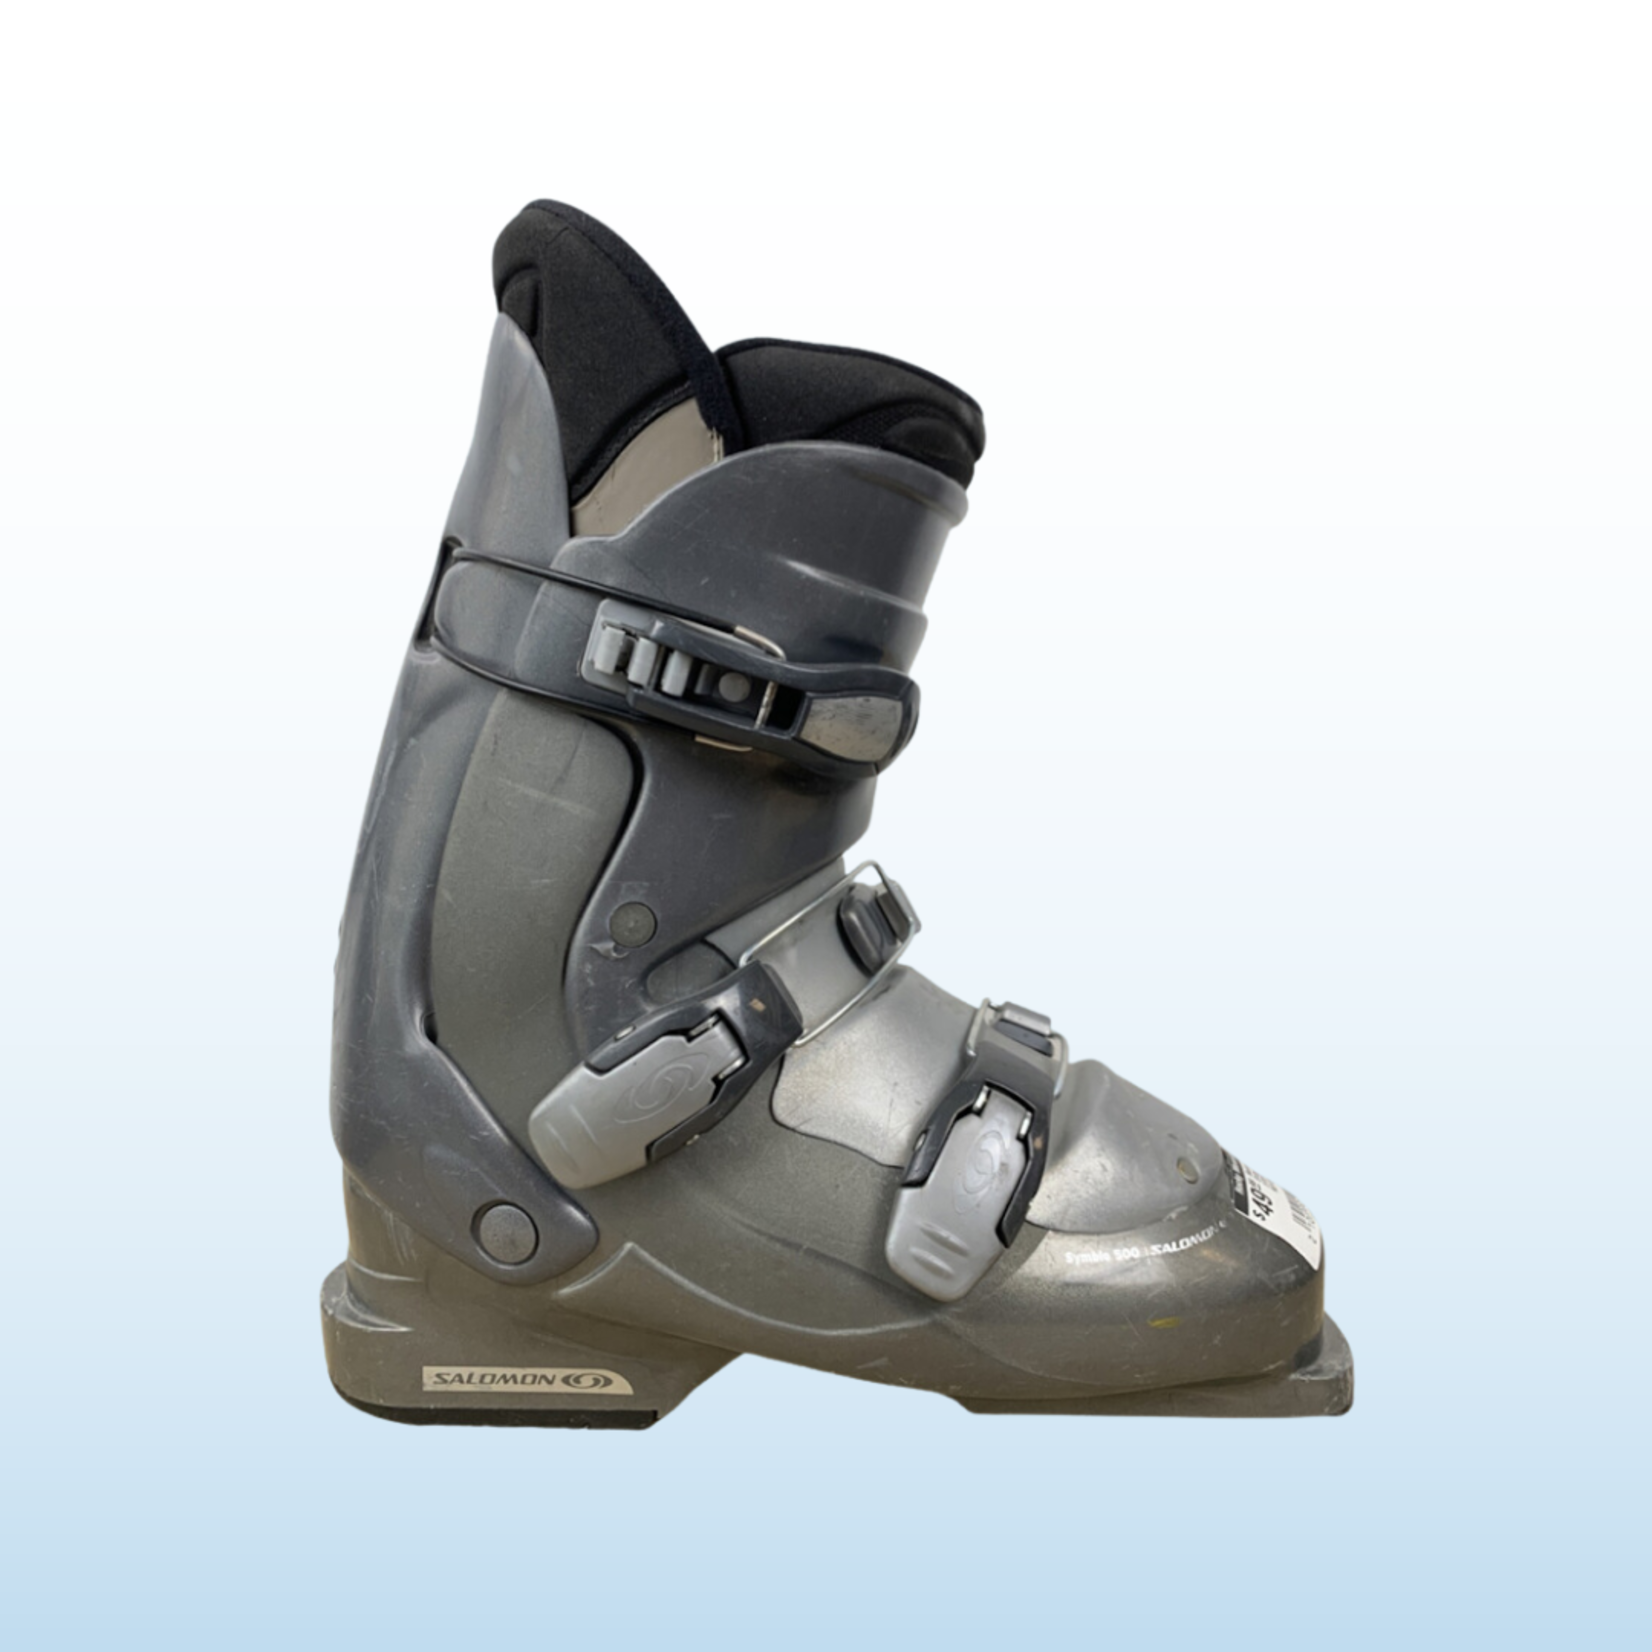 Salomon Salomon Symbio Ski Boots, Size 25.5 (SOLD AS IS/NO REFUNDS/EXCHANGES)